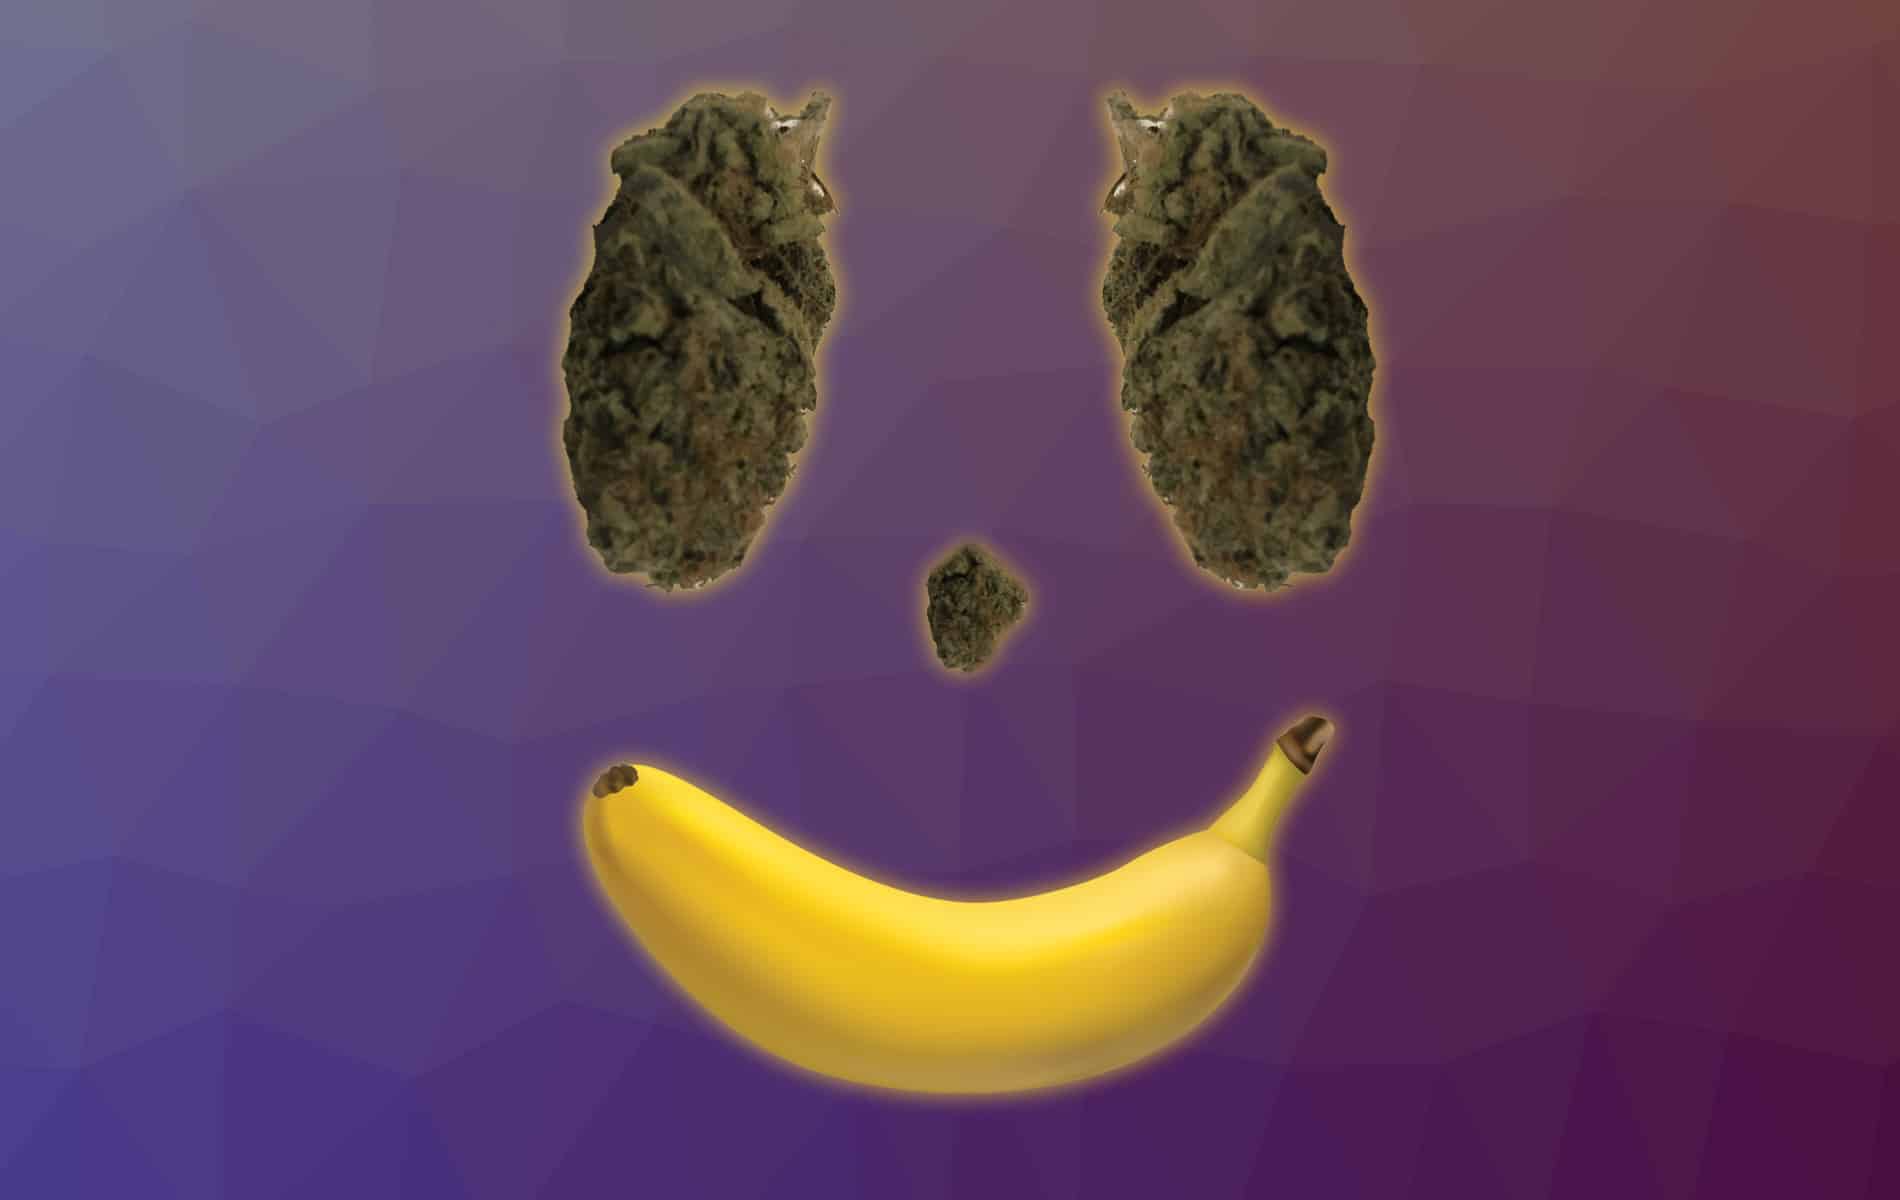 Cannabinthusiast | Medical Marijuana review: Banana Mac | Banana Mac Man